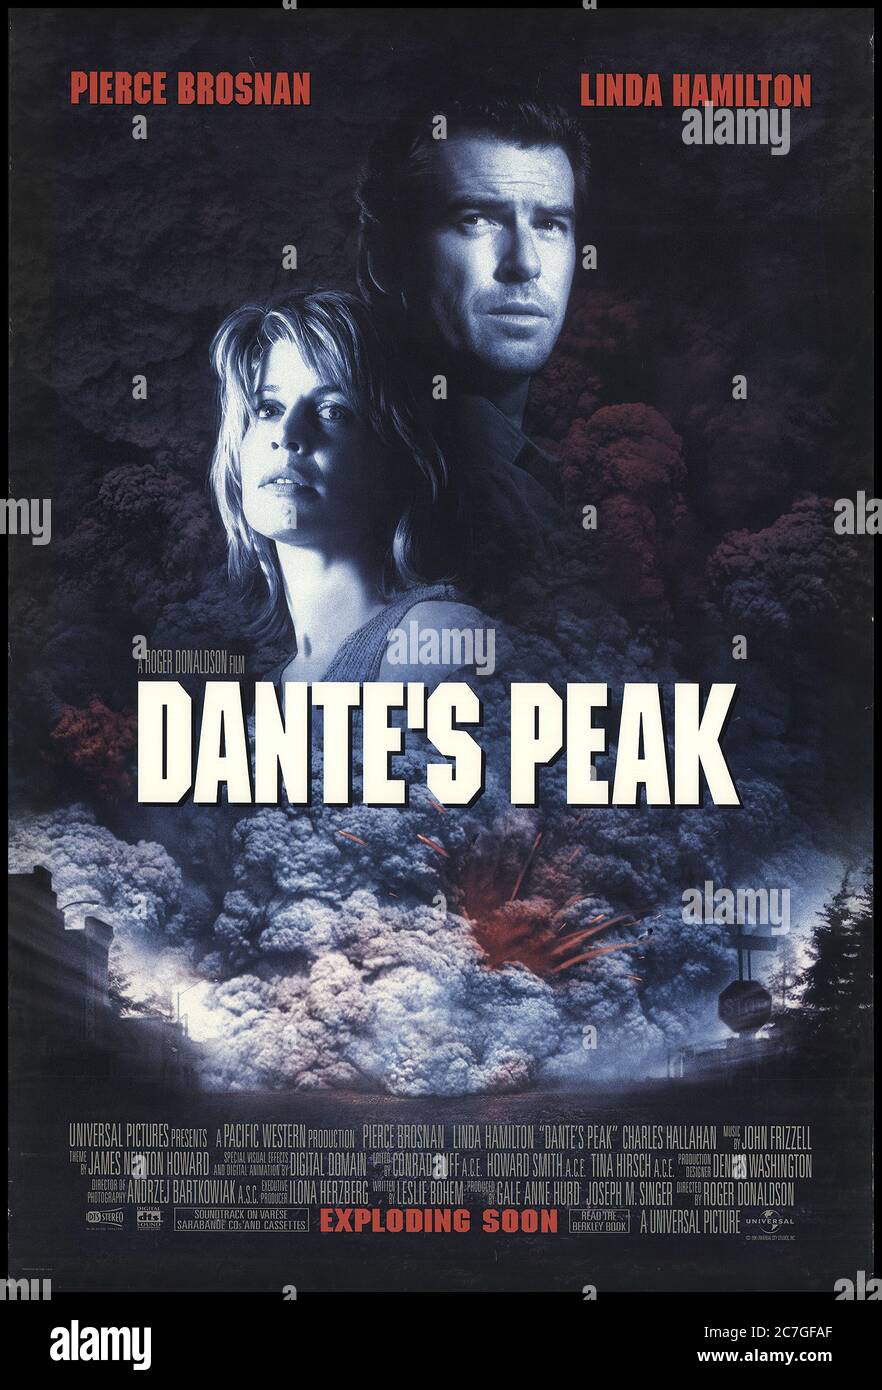 Dante's Peak - Movie Poster Stock Photo